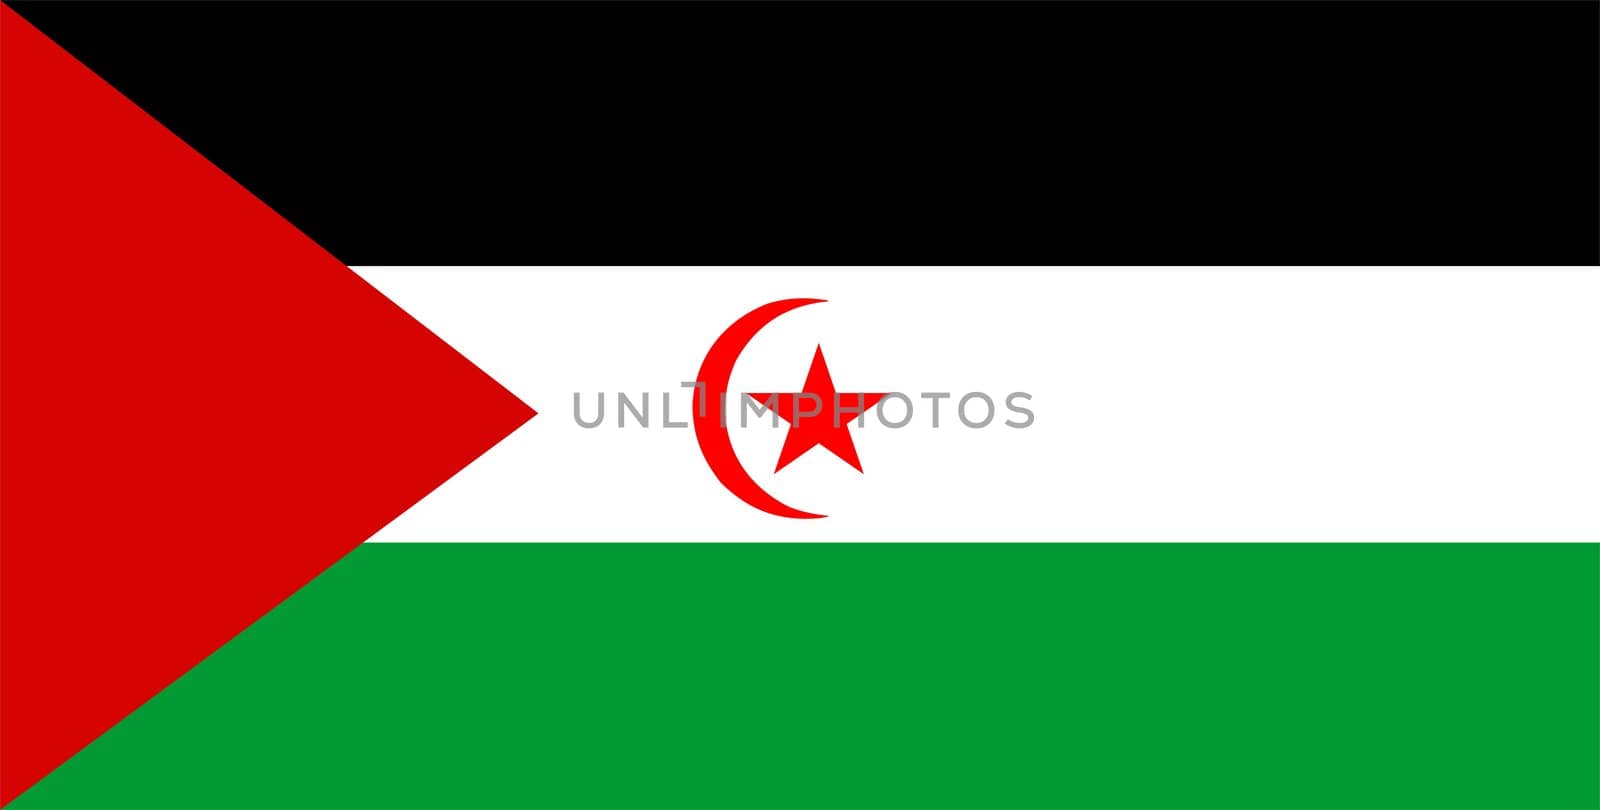 2D illustration of the flag of Western Sahara